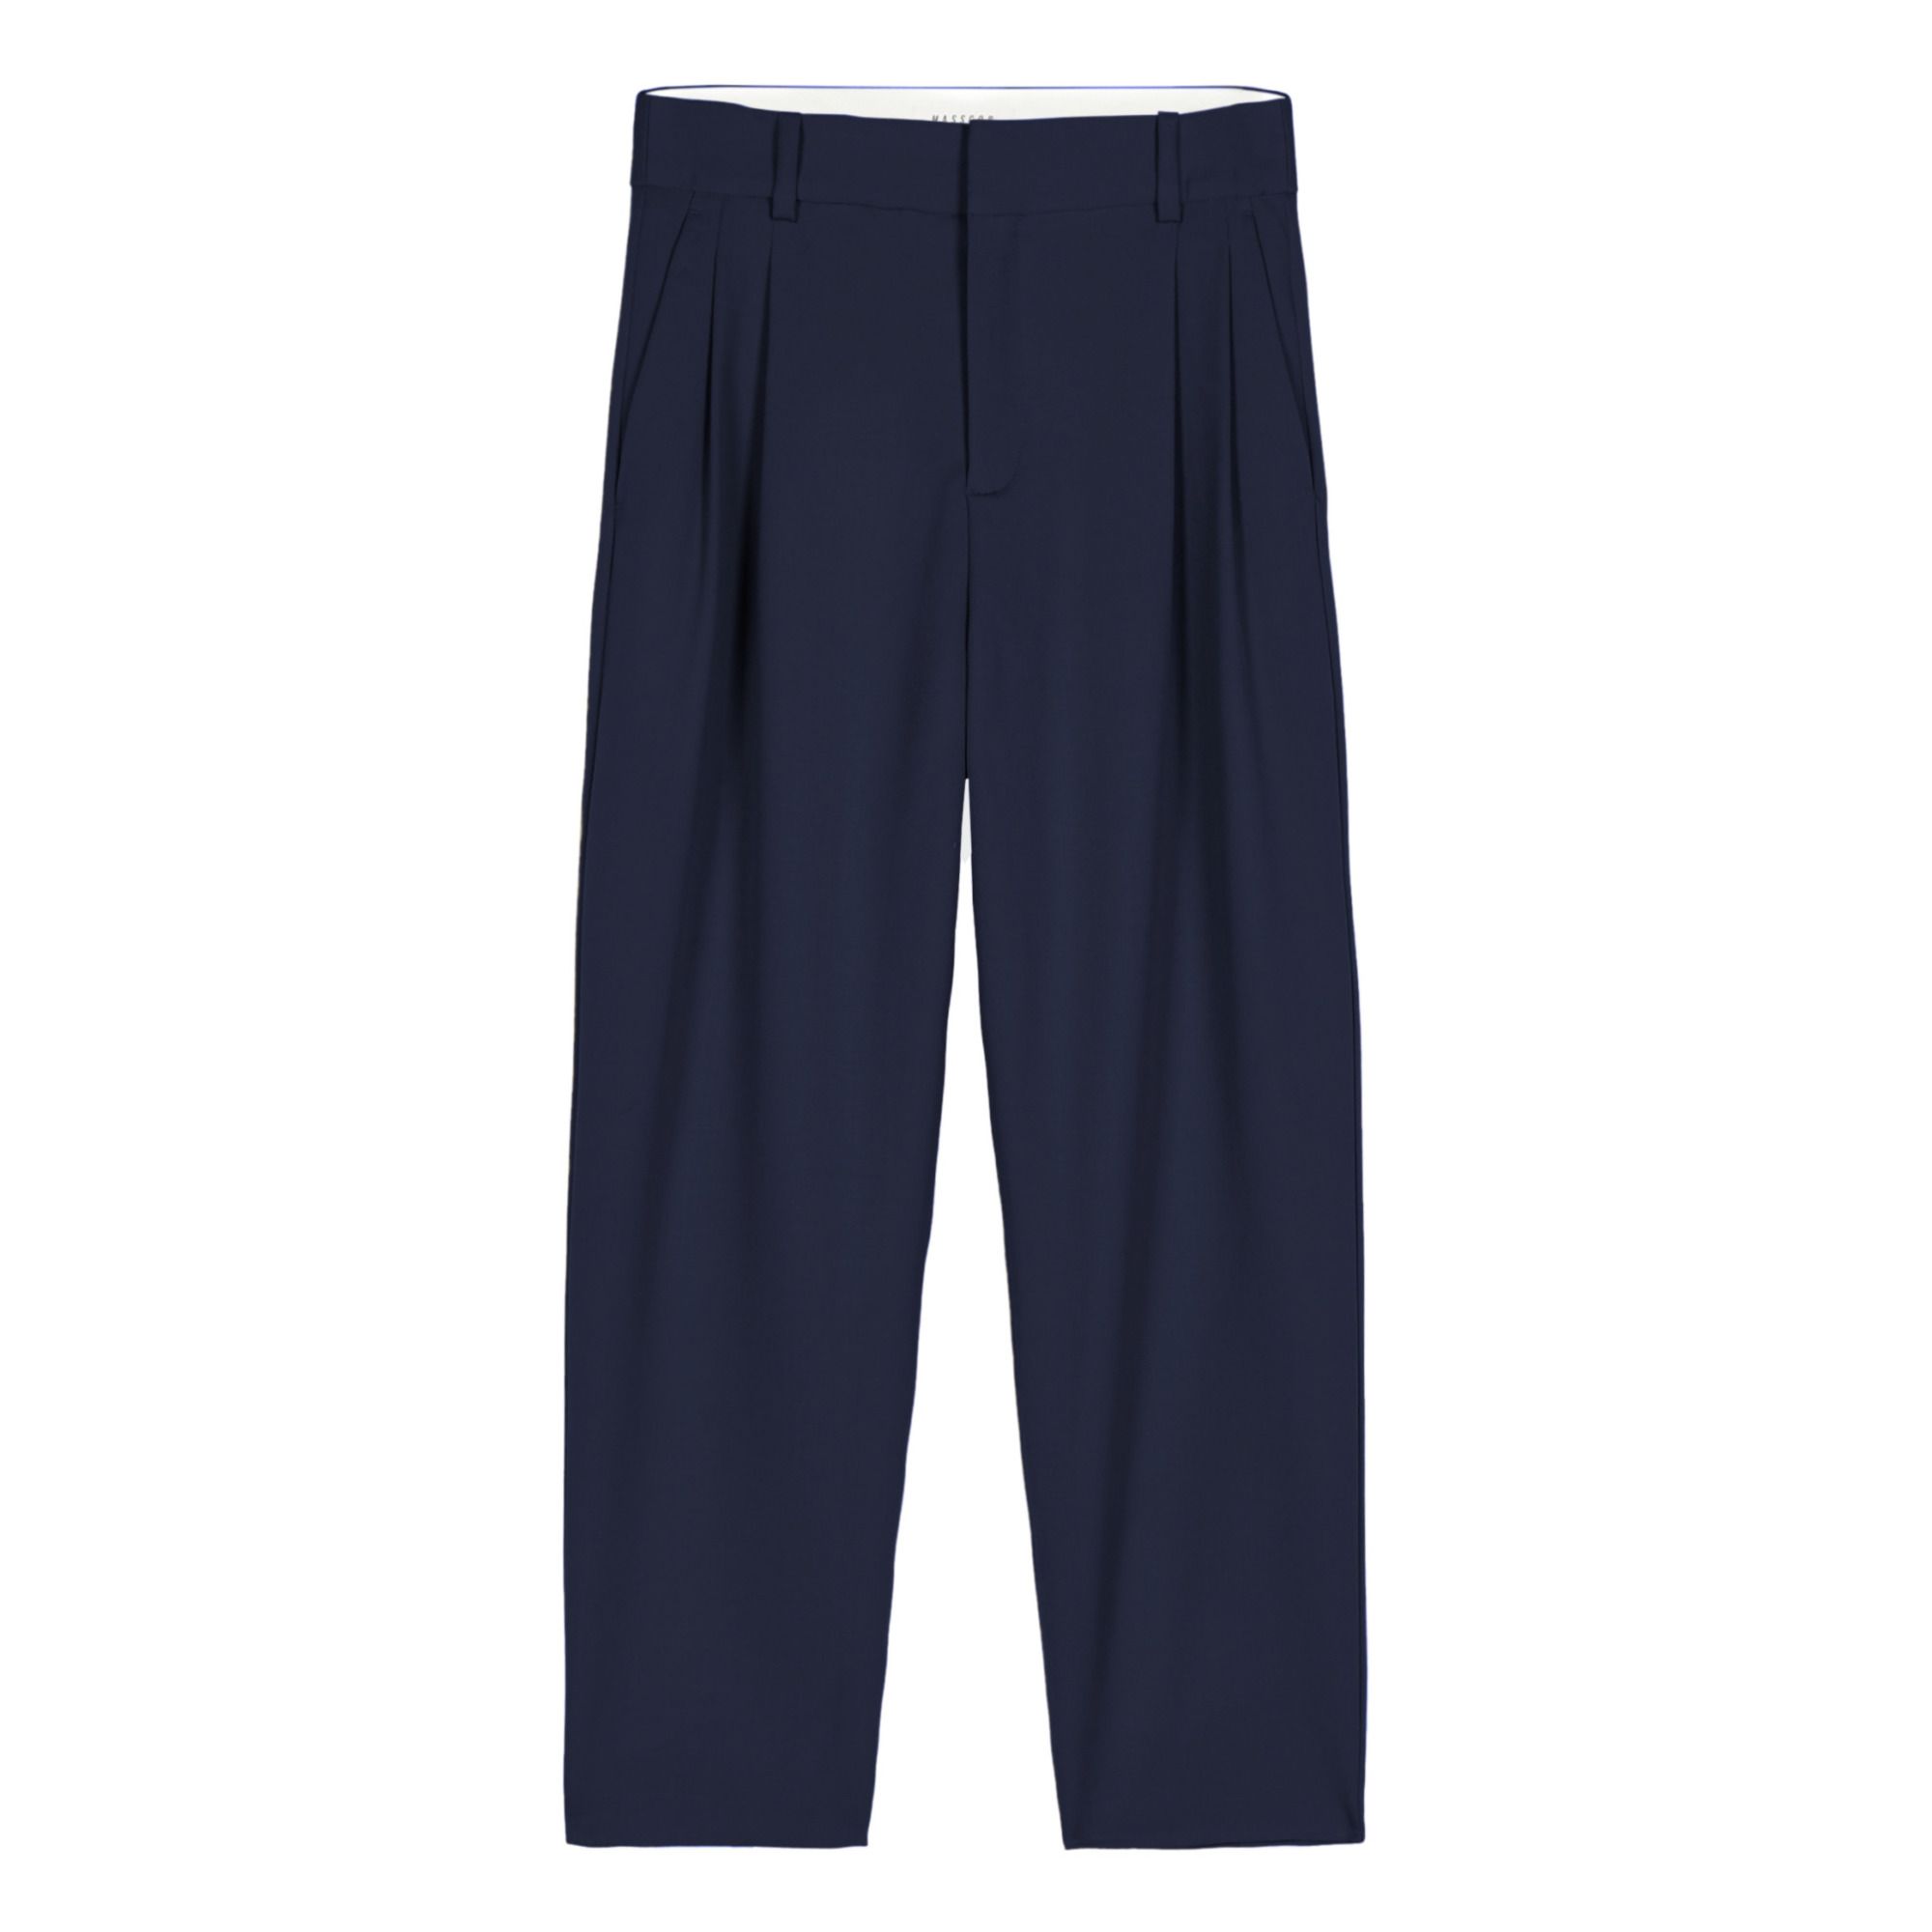 Masscob - Steven Wool Pants - Navy blue | Smallable